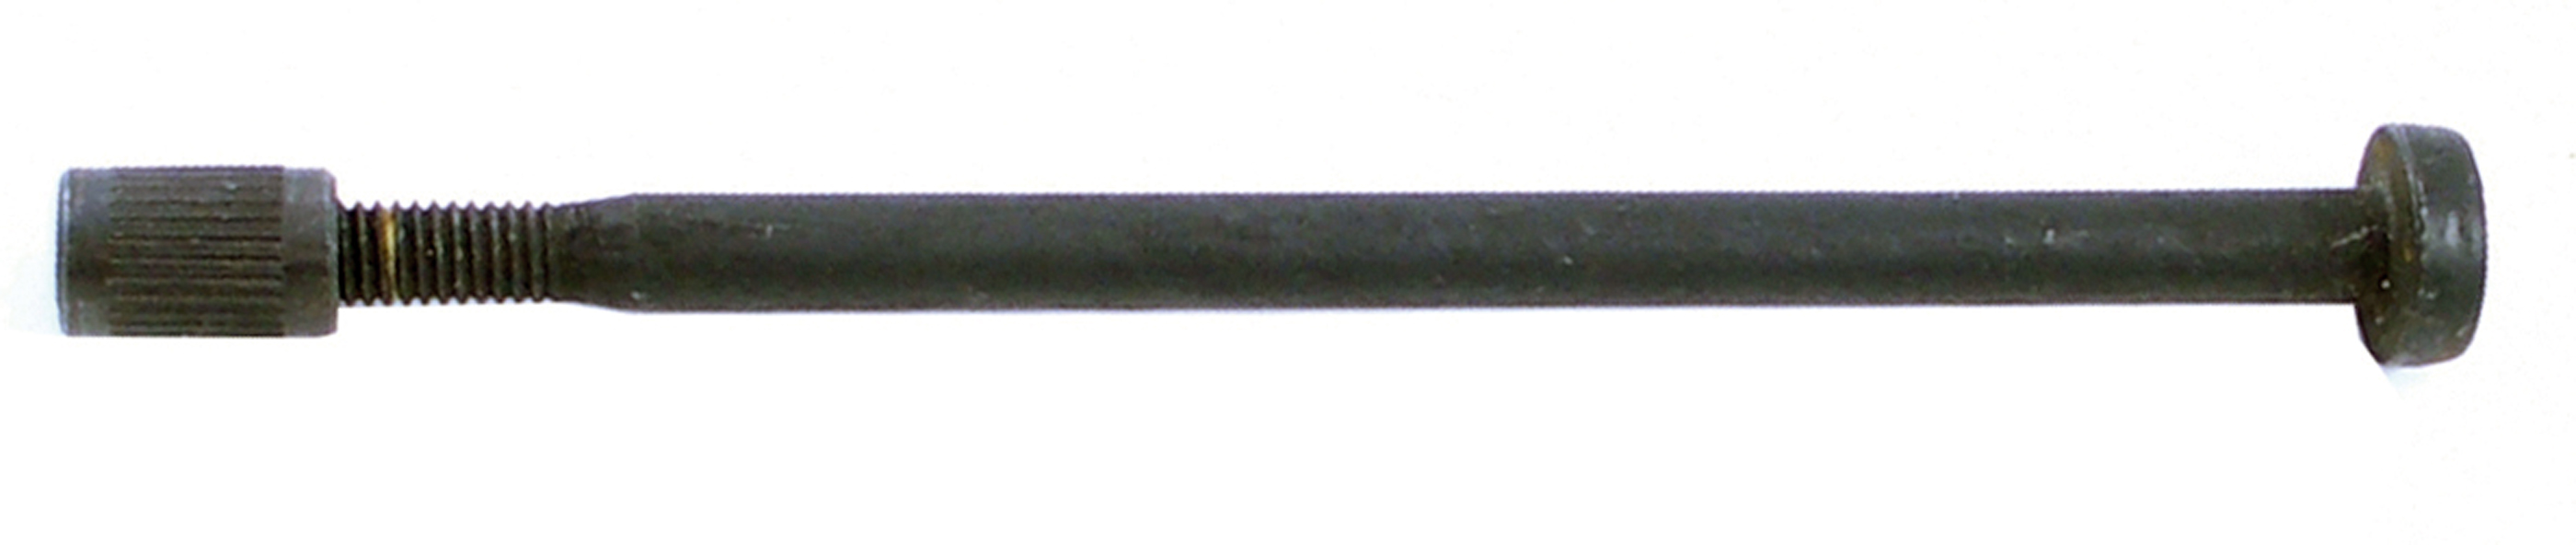 BGS 1801 Bolt pentru demontat balama usa, dimensiuni 5 x 115 mm